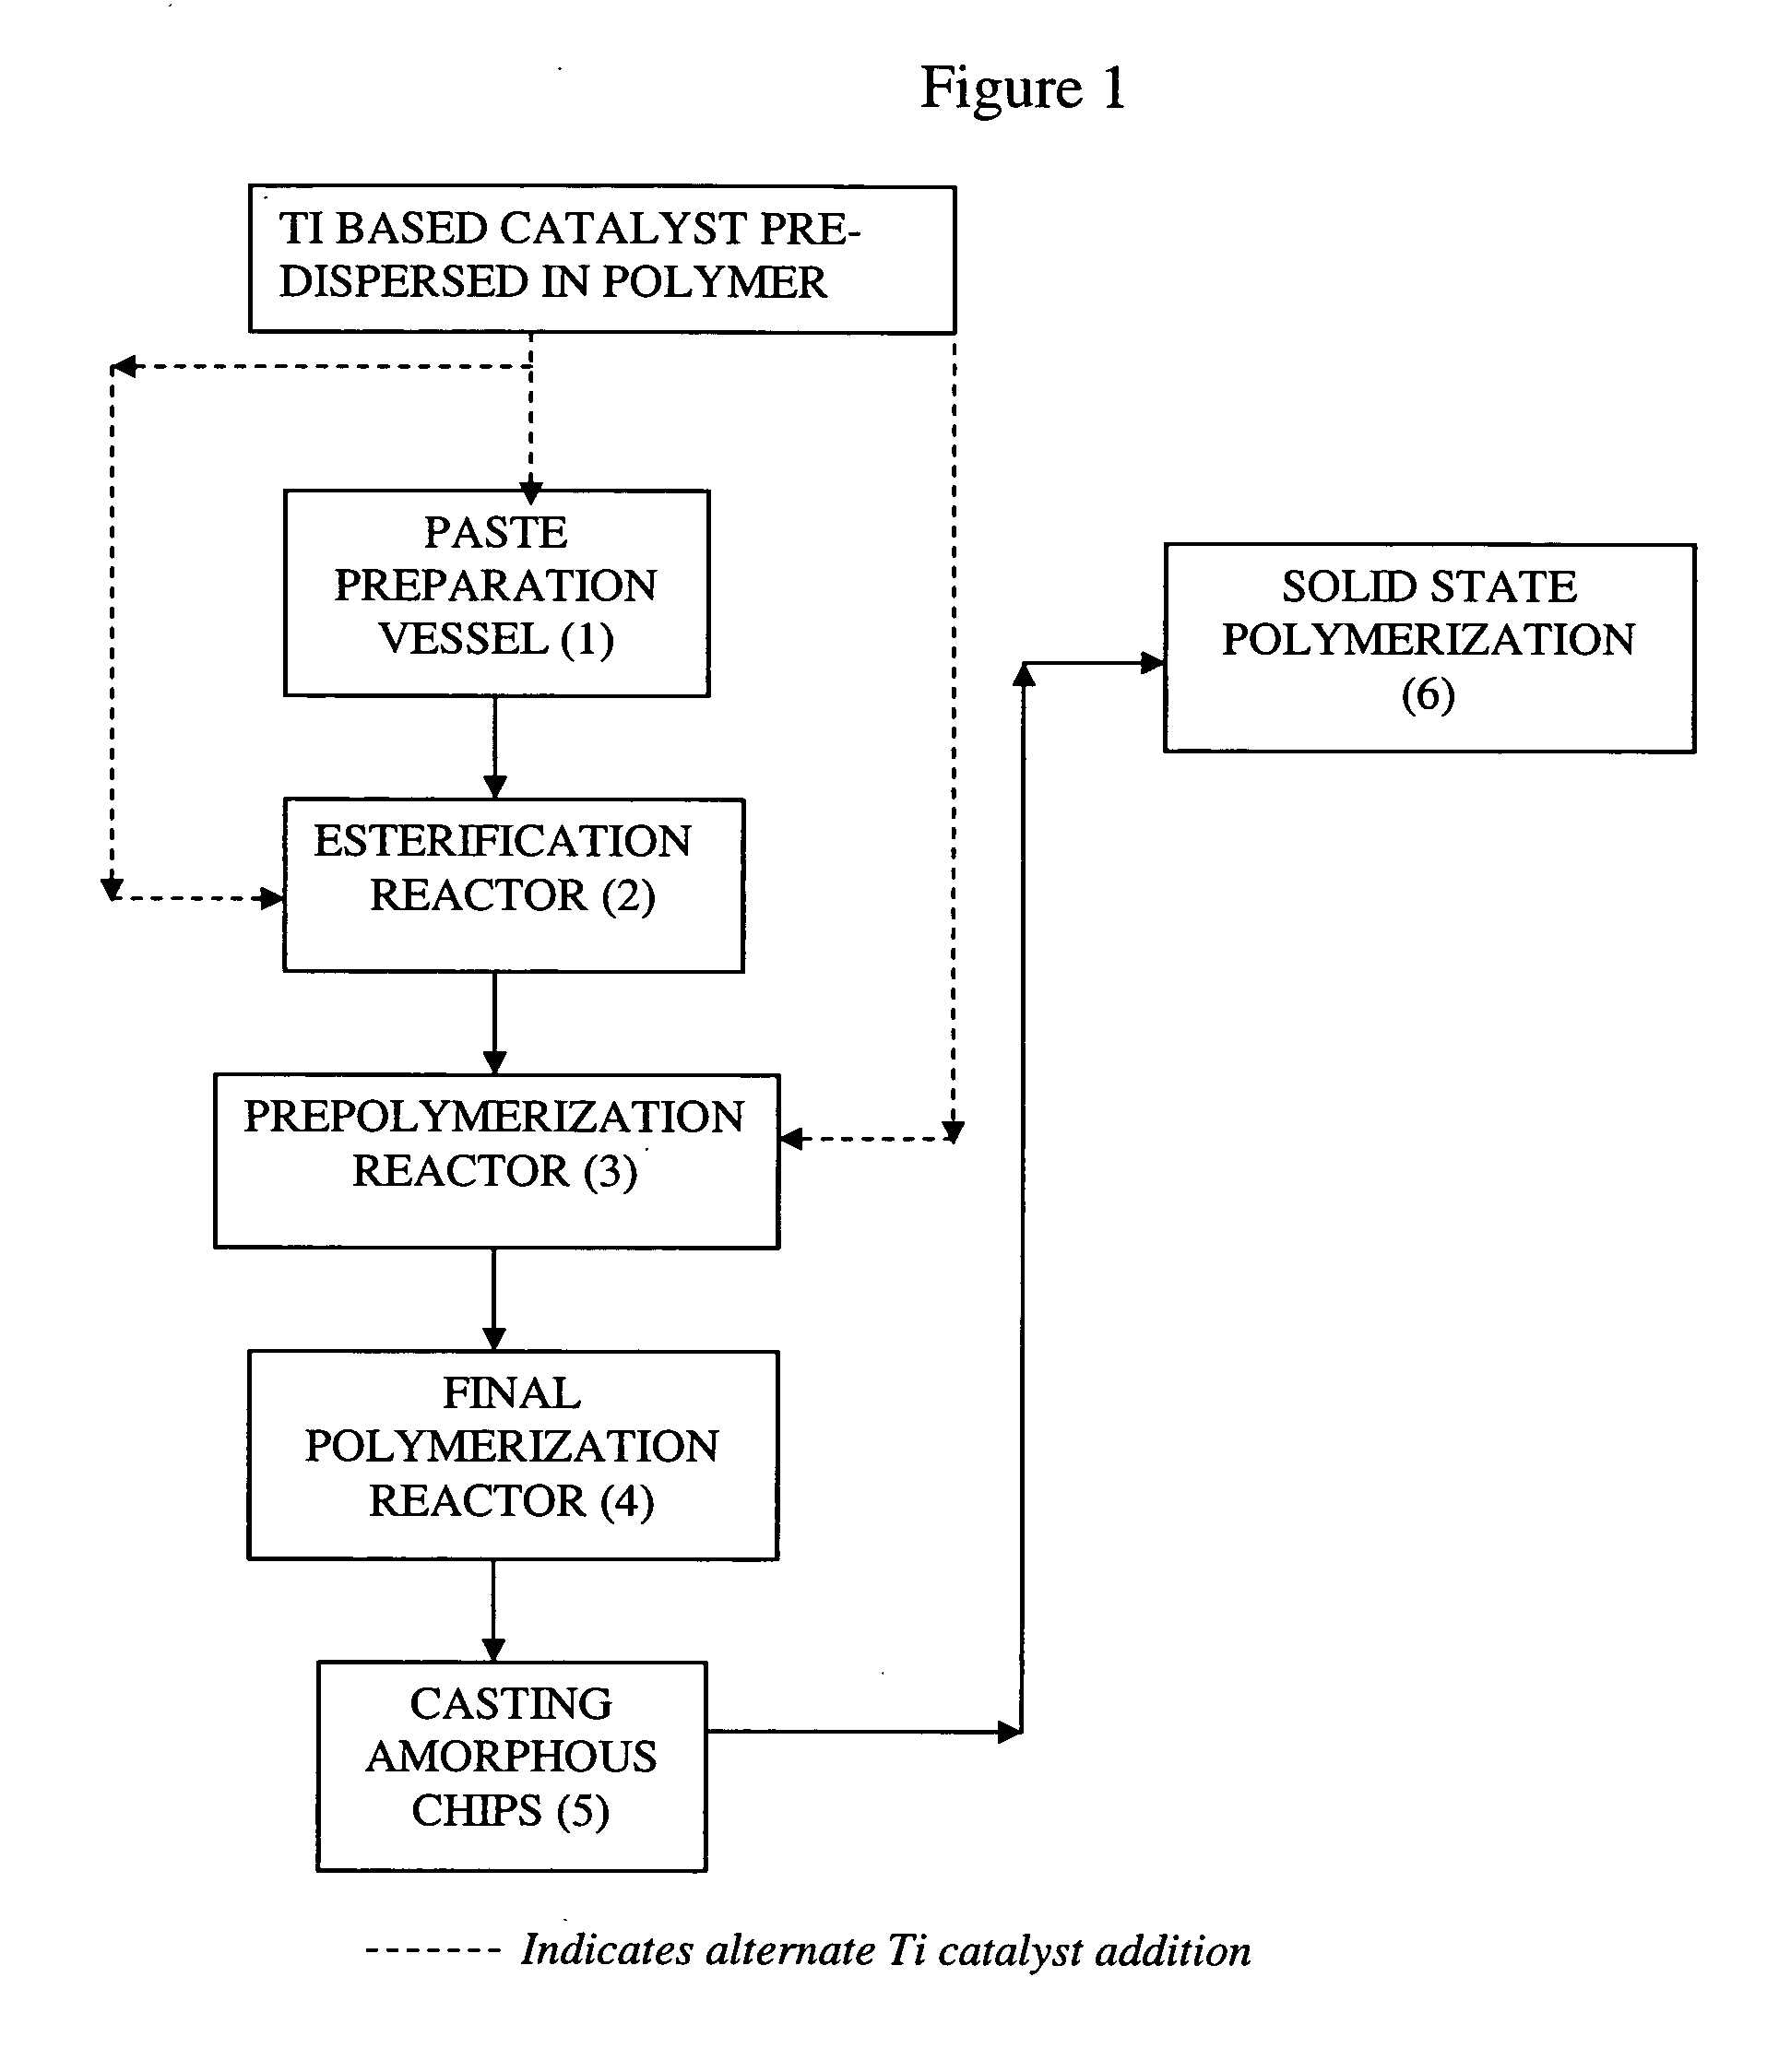 Process for the preparation of polyethylene terephthalate (PET)